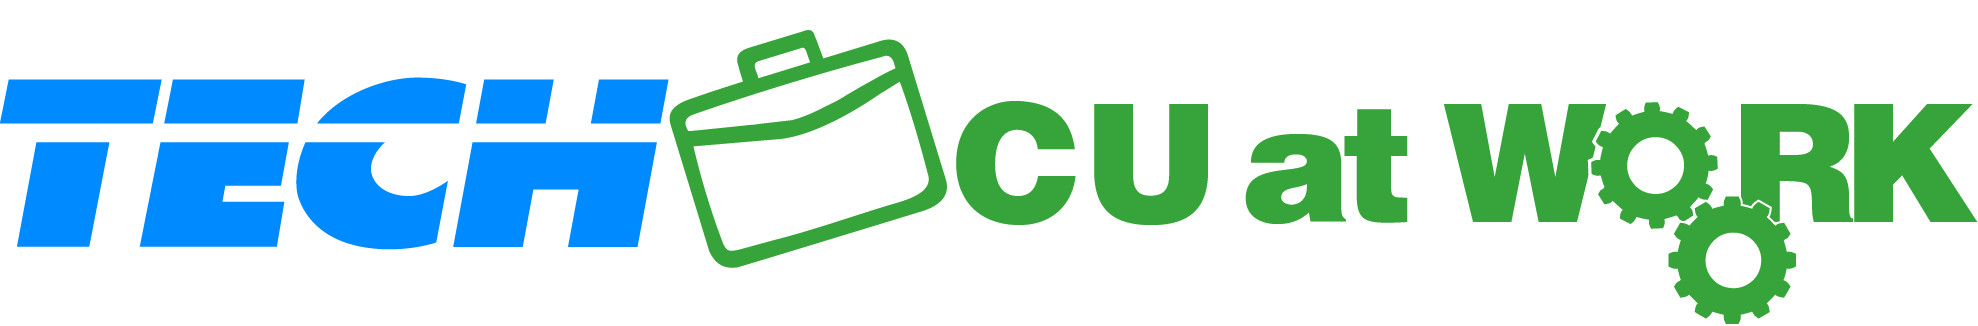 Tech CU at WORK logo